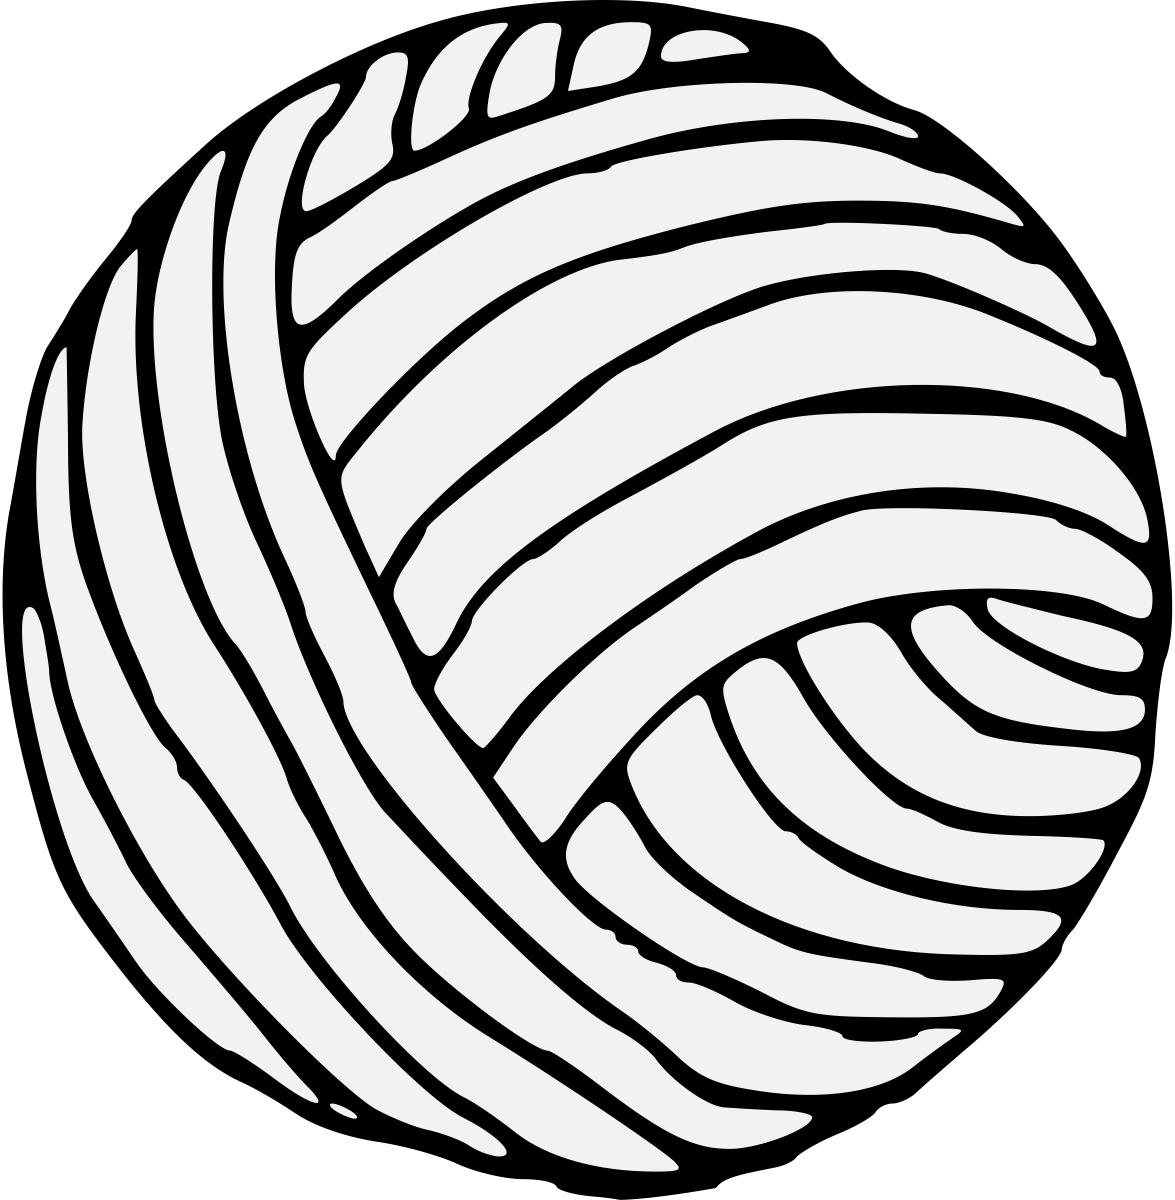 Ball Of Yarn - Yarn Ball Clipart Png (1175x1200)